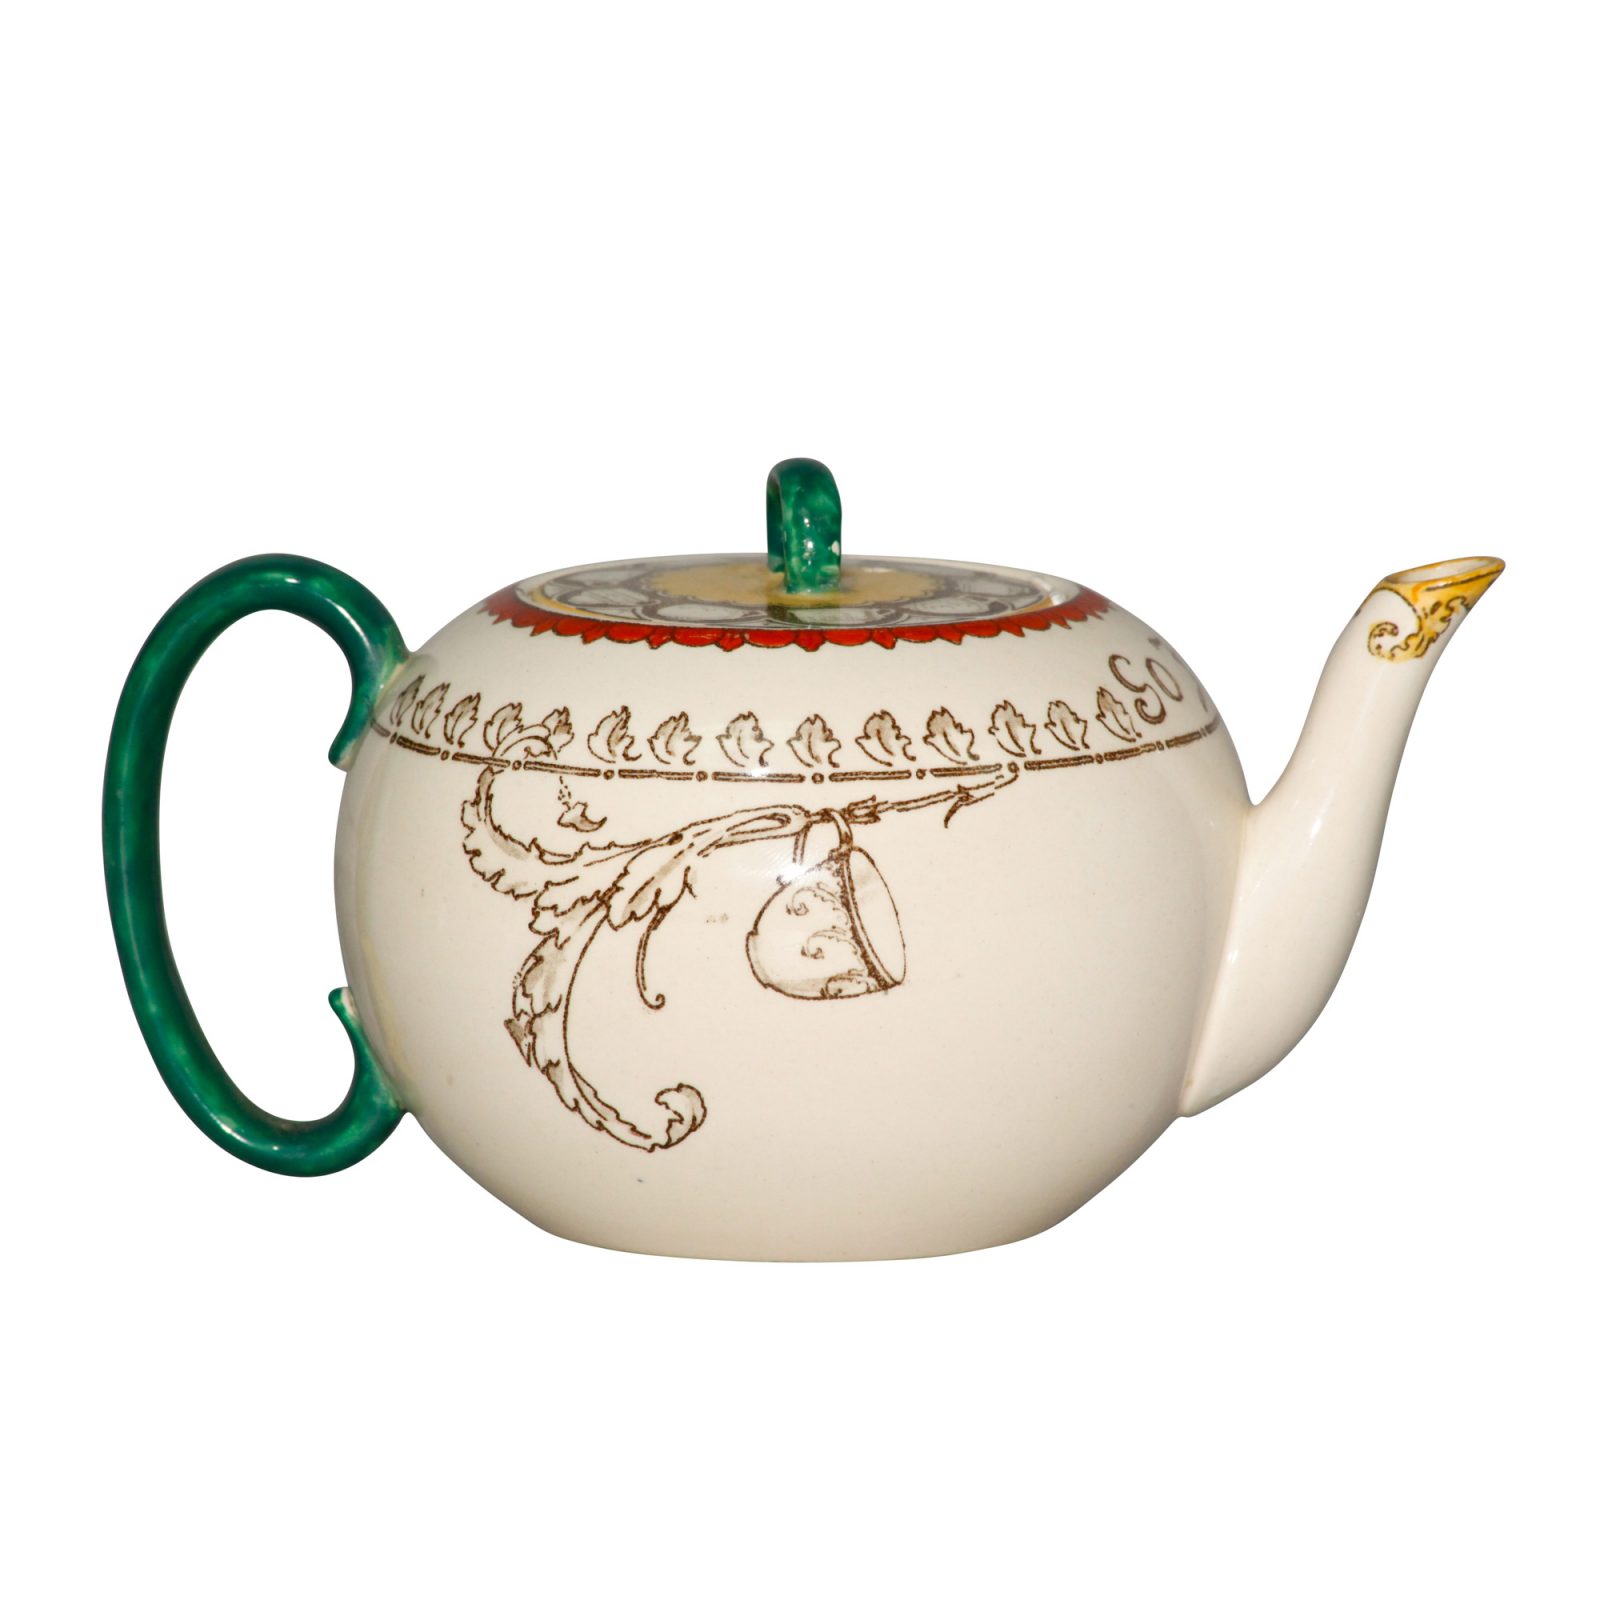 Teapot "Monks and Mottoes" - Royal Doulton Seriesware